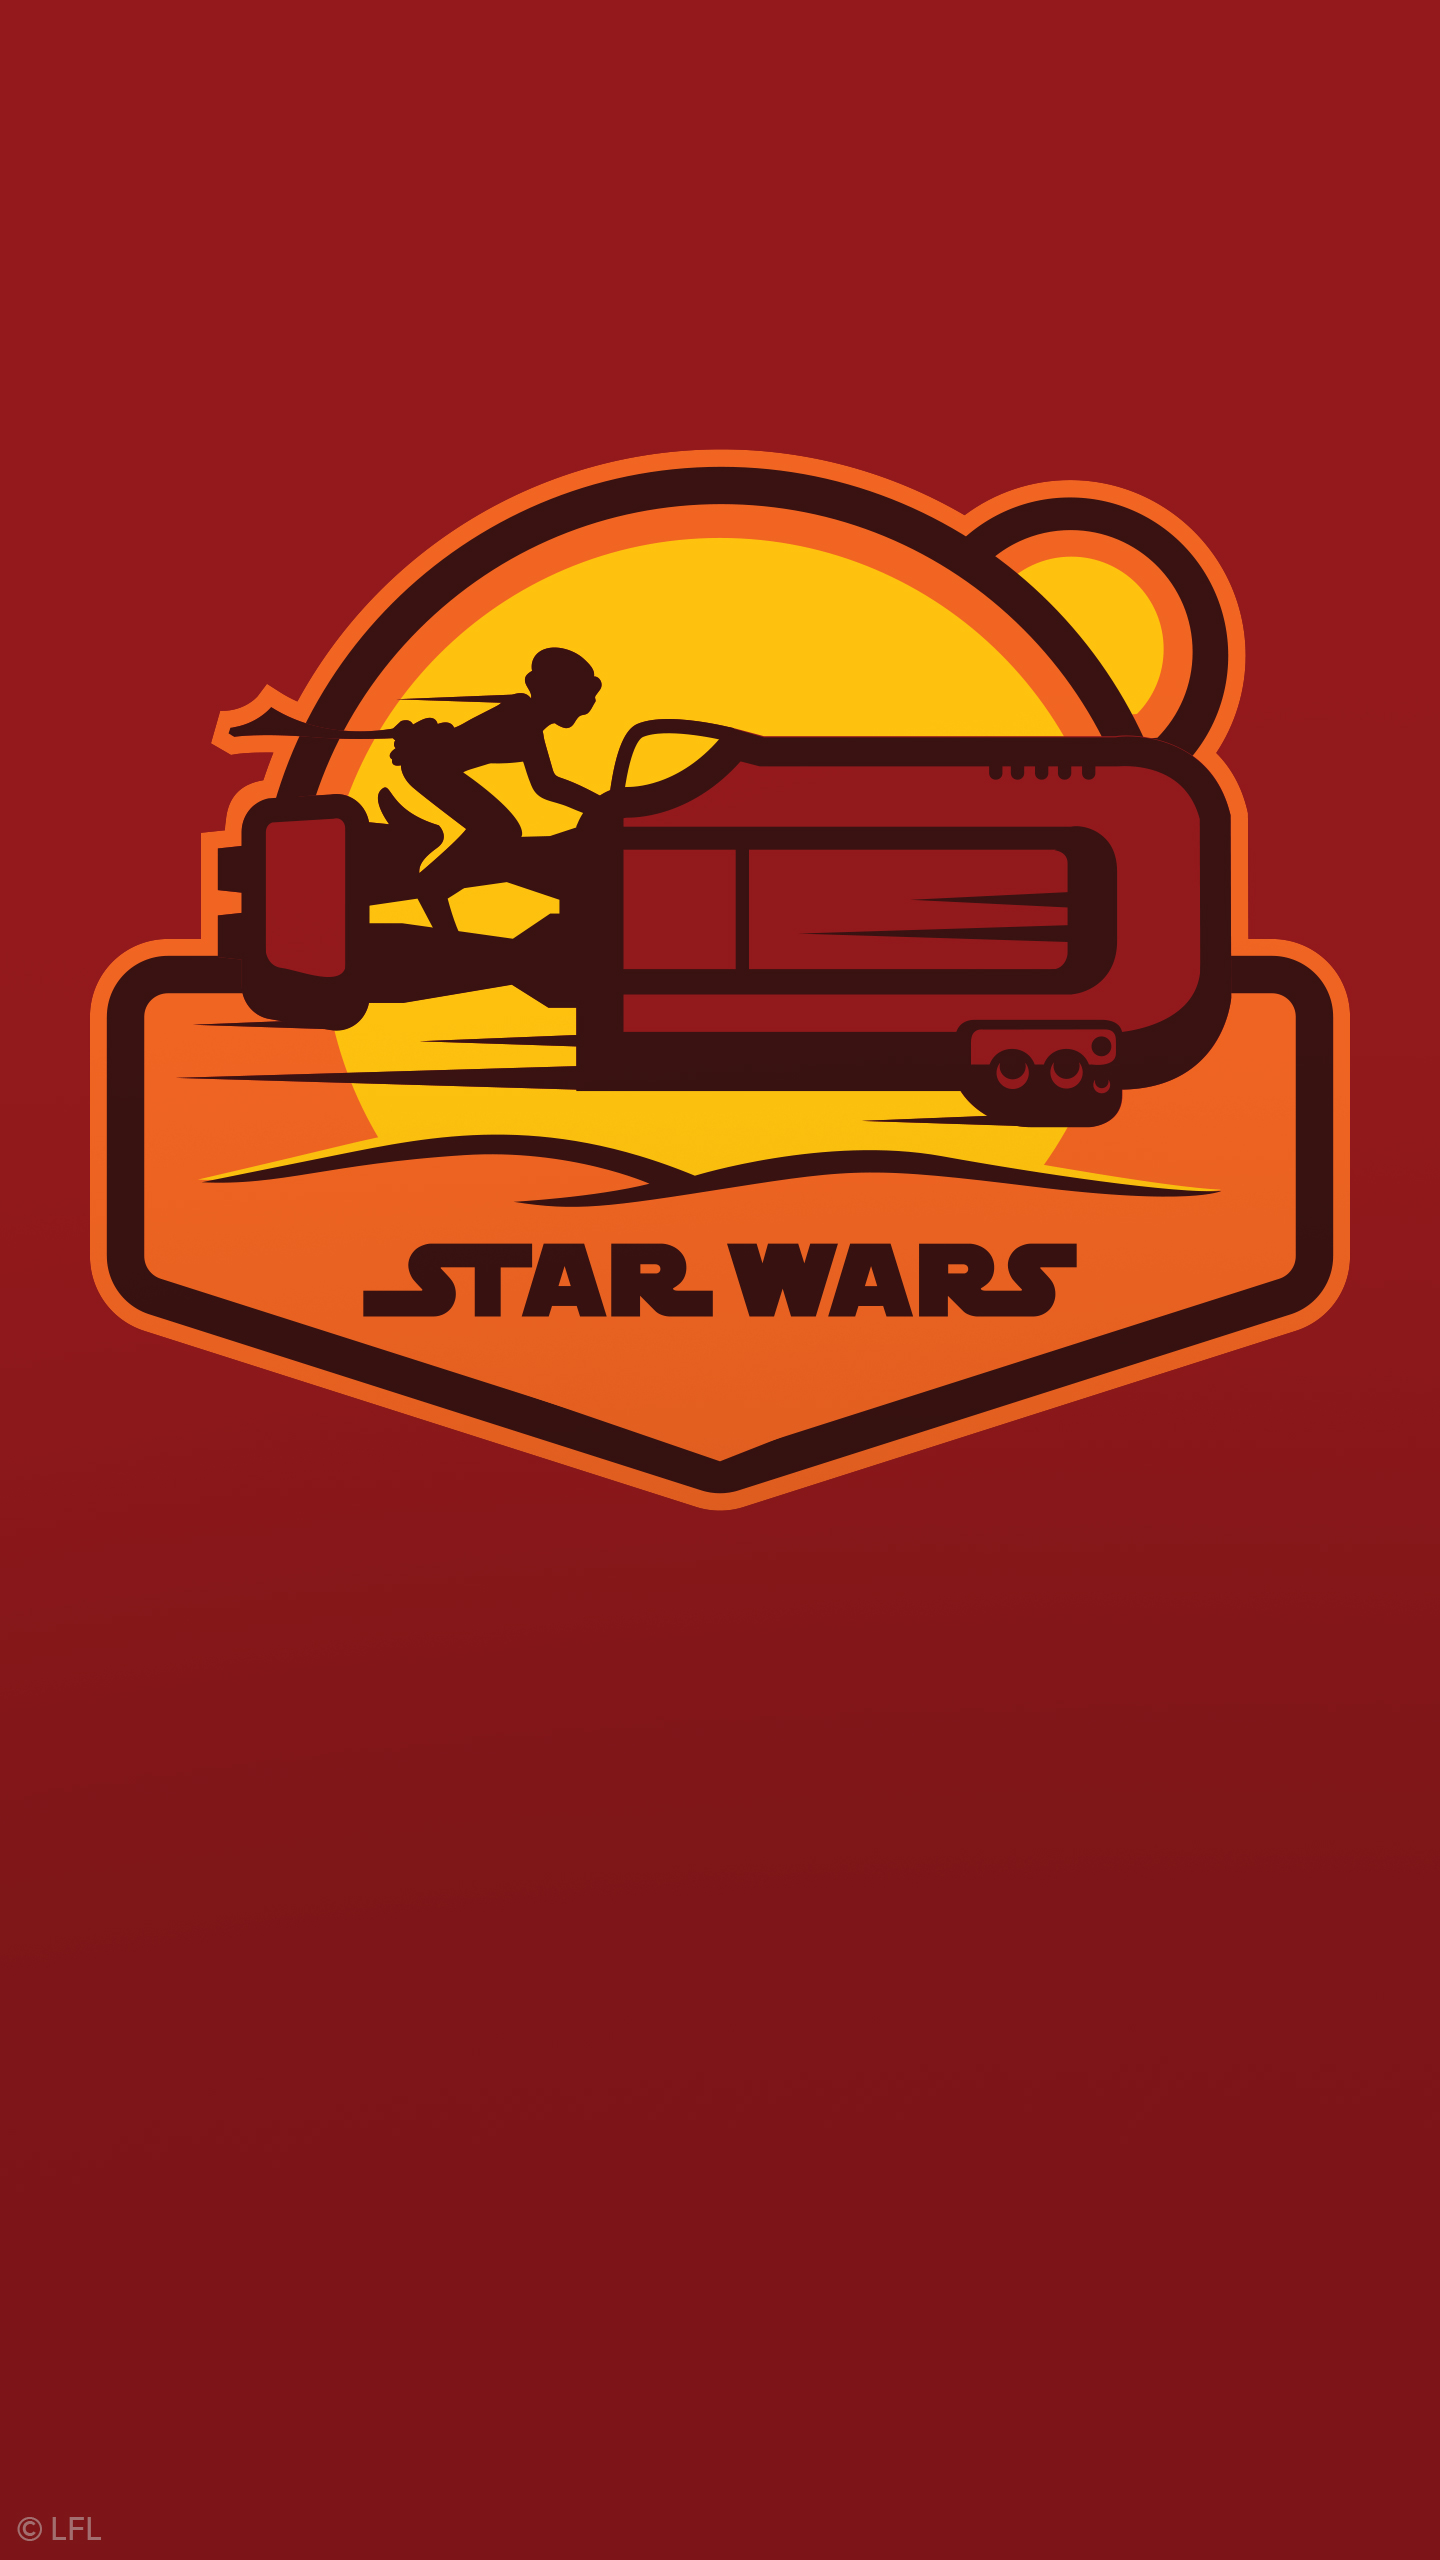 star wars android wallpaper,red,logo,illustration,font,graphics